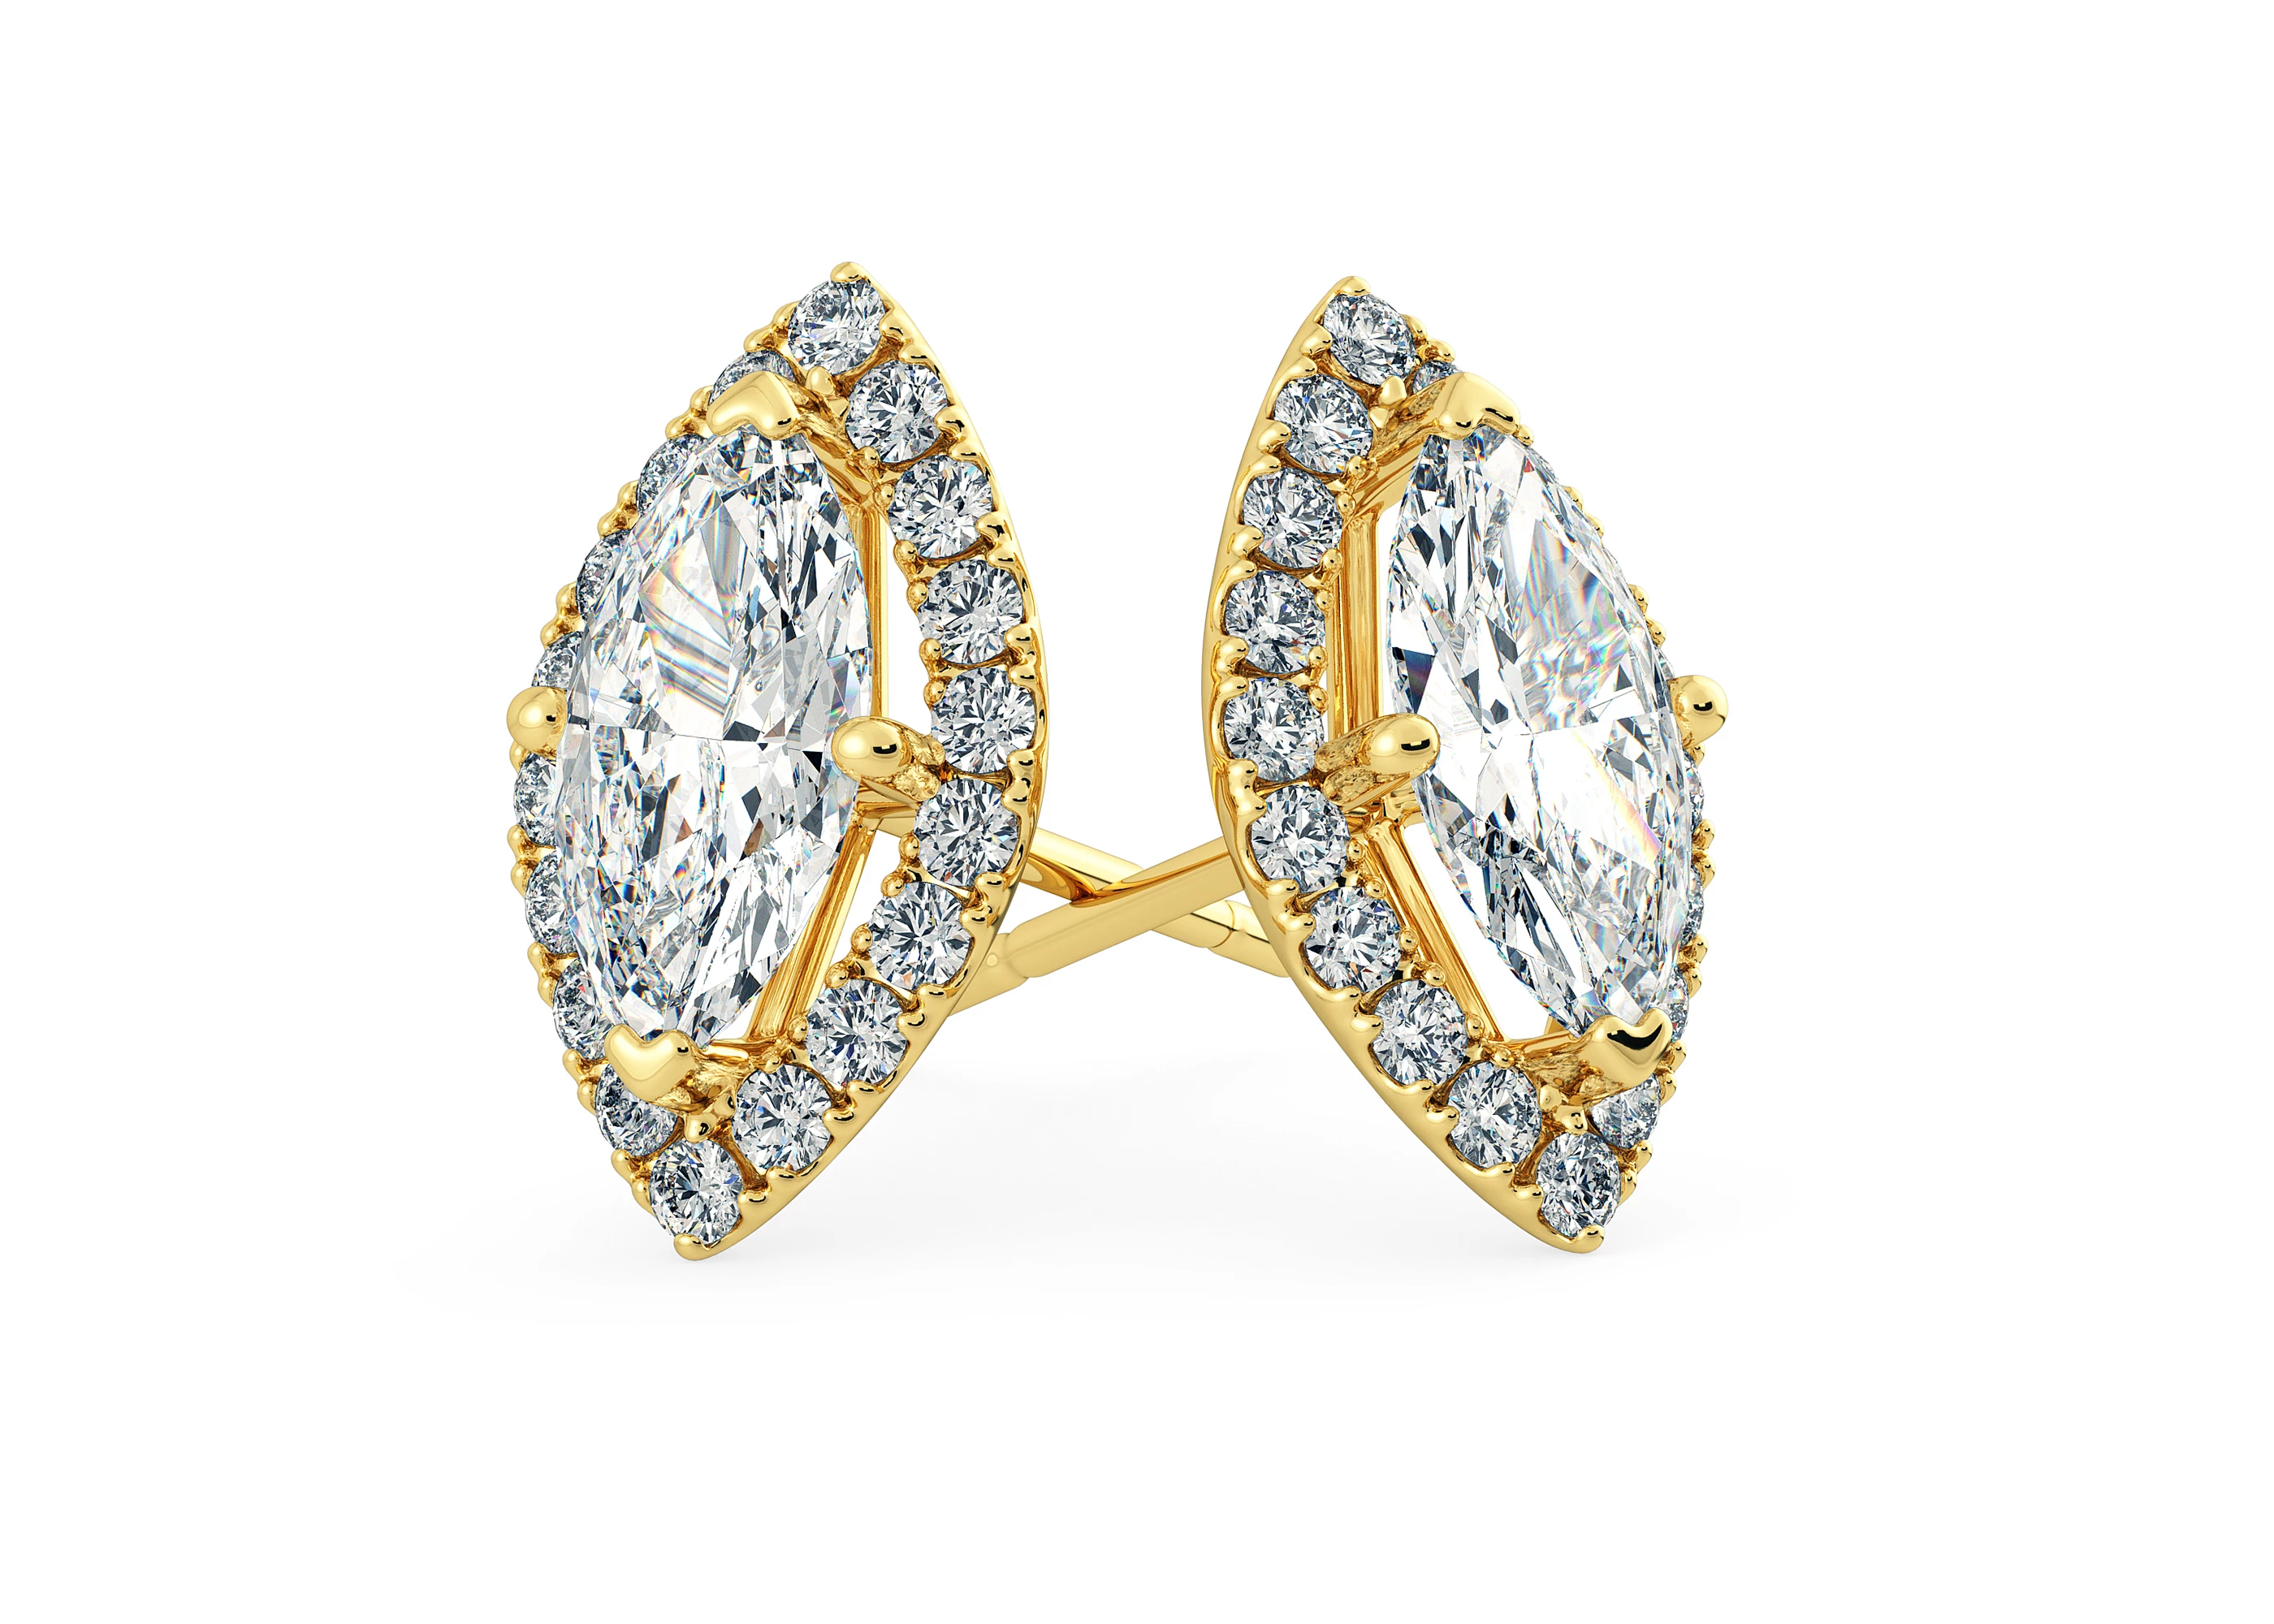 Bijou Marquise Diamond Stud Earrings in 18K Yellow Gold with Butterfly Backs